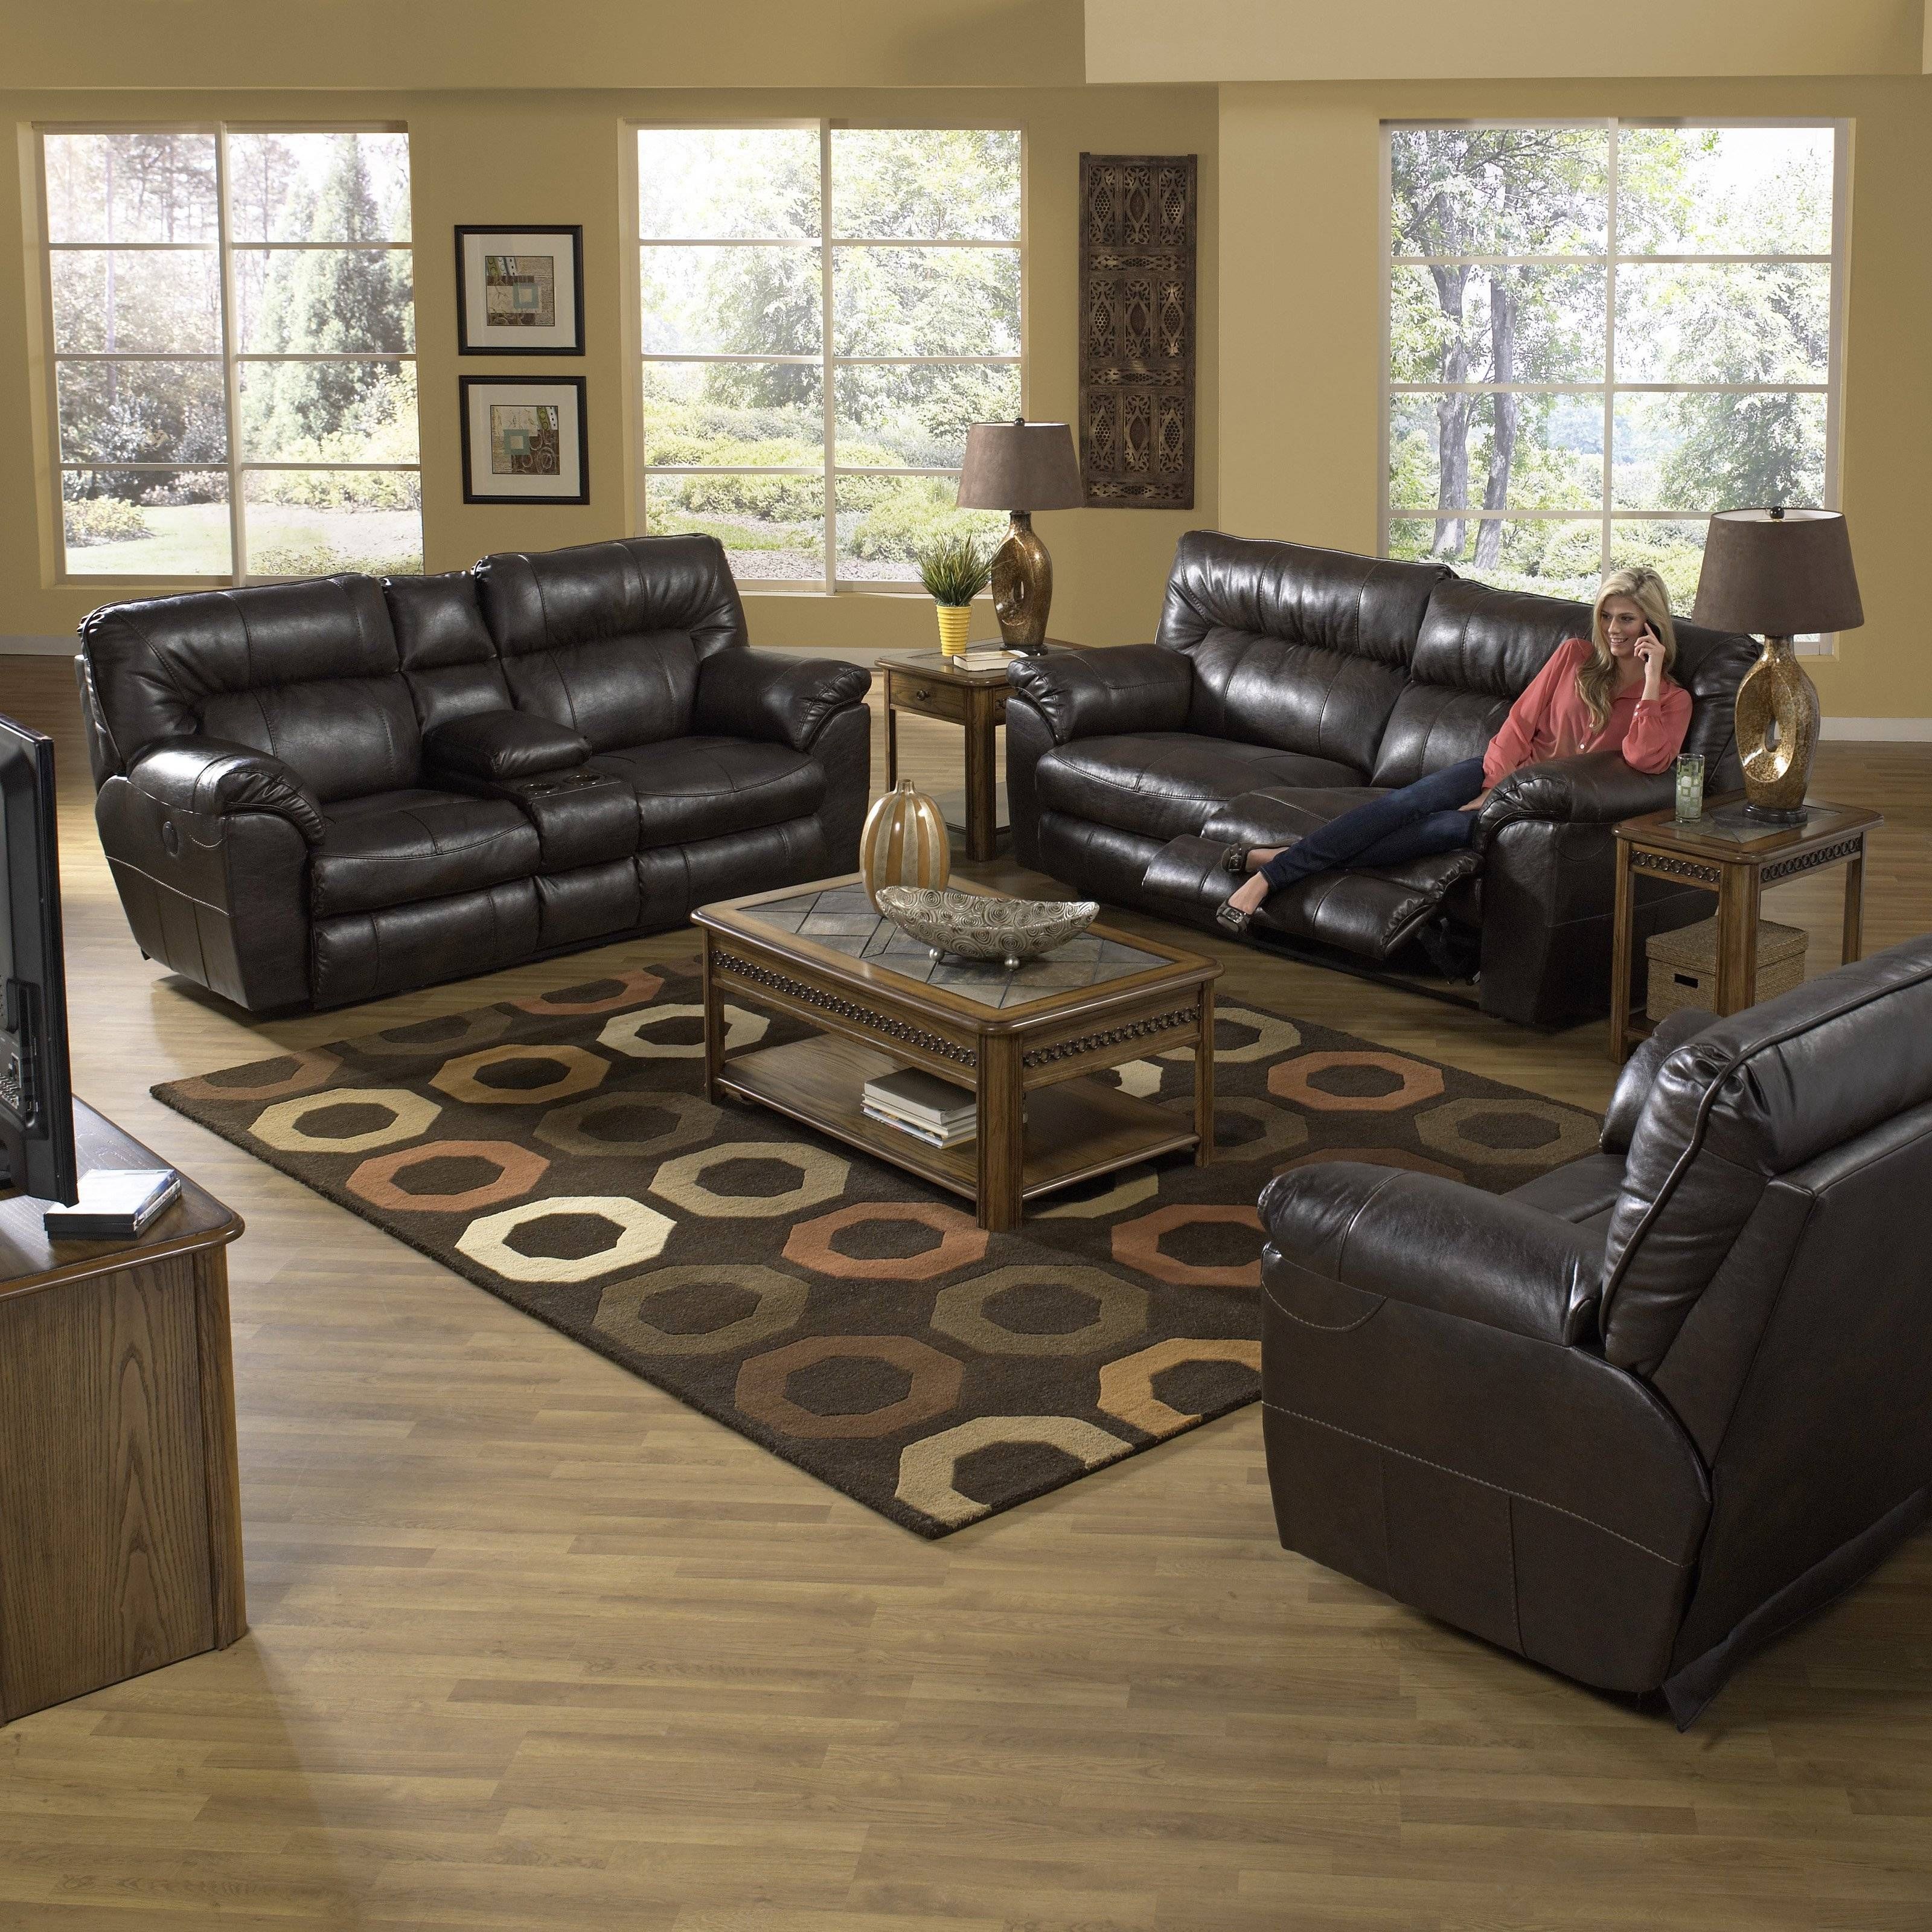 Catnapper Nolan Leather Reclining Sofa Set – Godiva | Hayneedle For Catnapper Recliner Sofas (View 4 of 15)